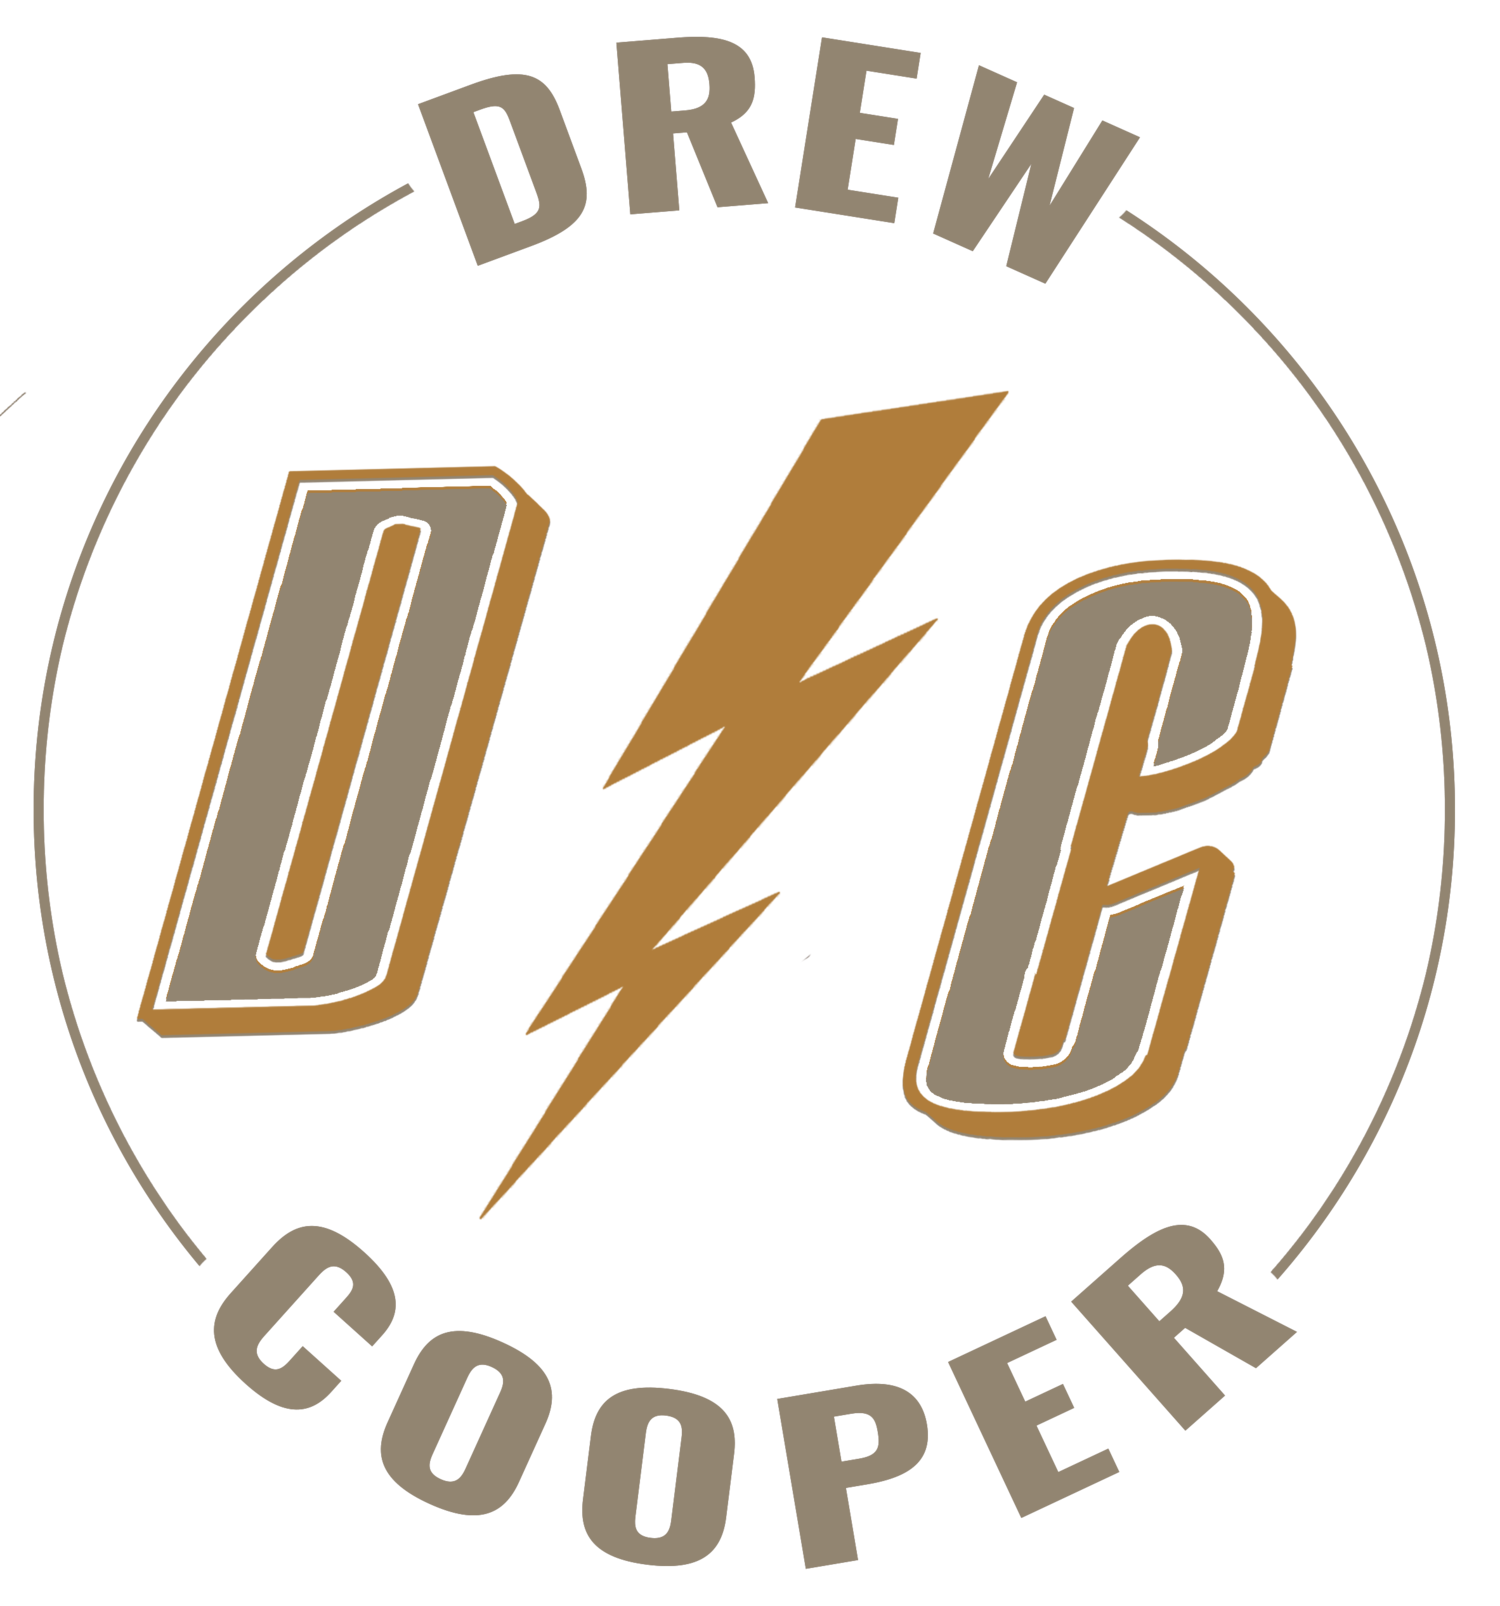 Drew Cooper